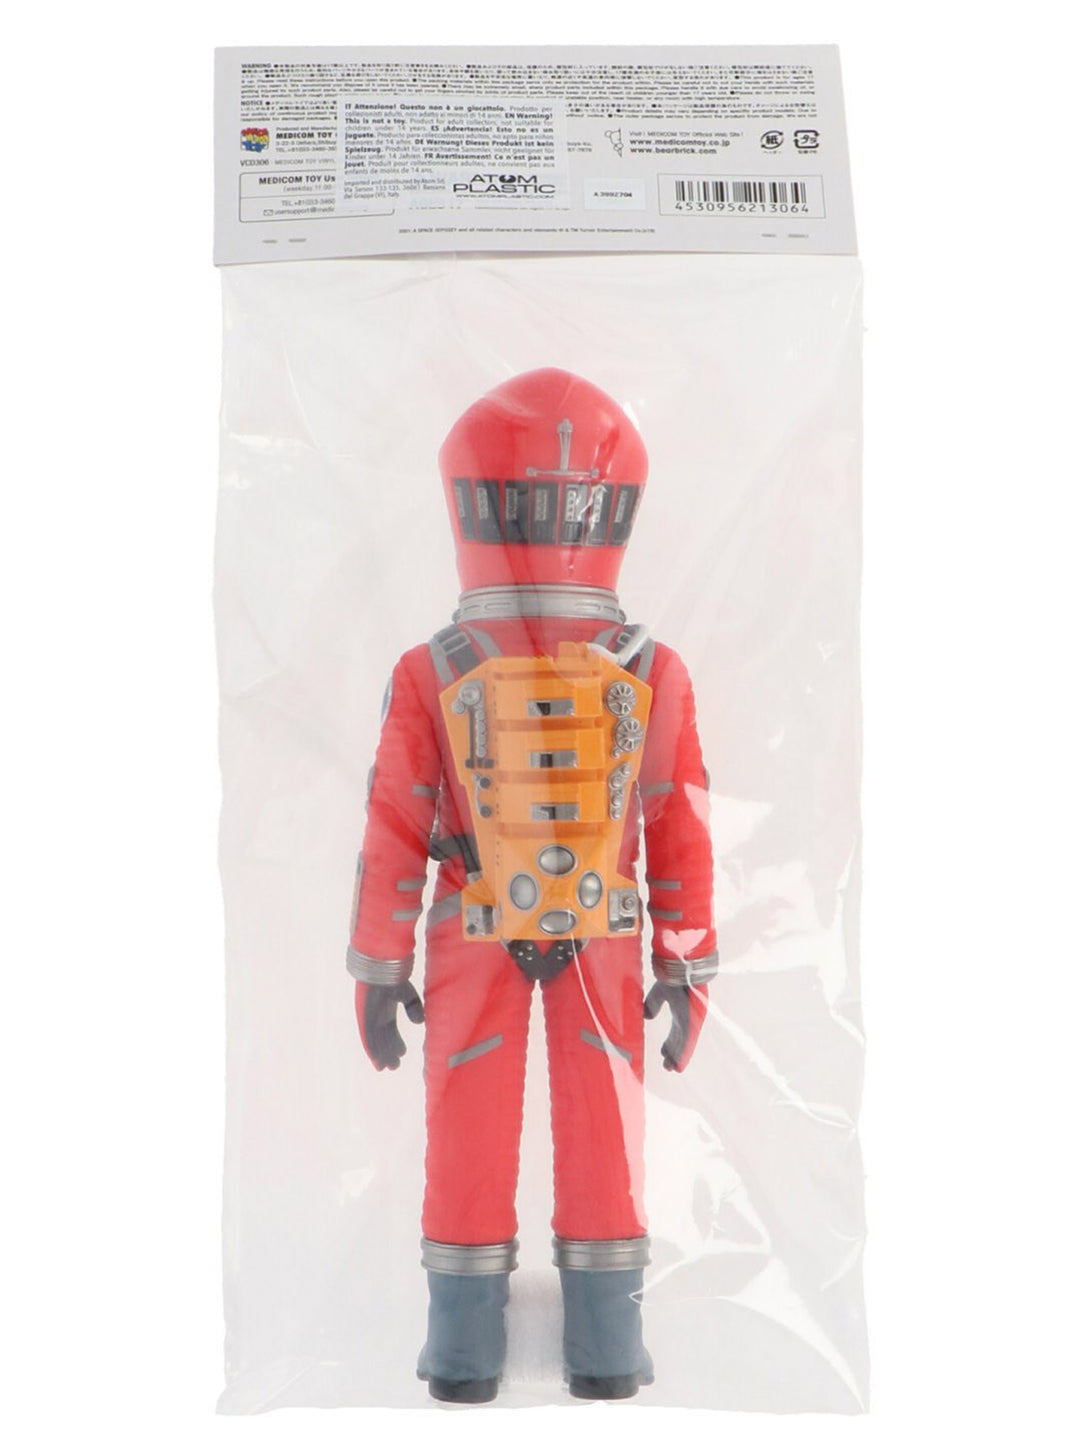 Vinyl Collectible Dolls 2001: A Space Odyssey Space Suit Decorative Accessories Multicolor